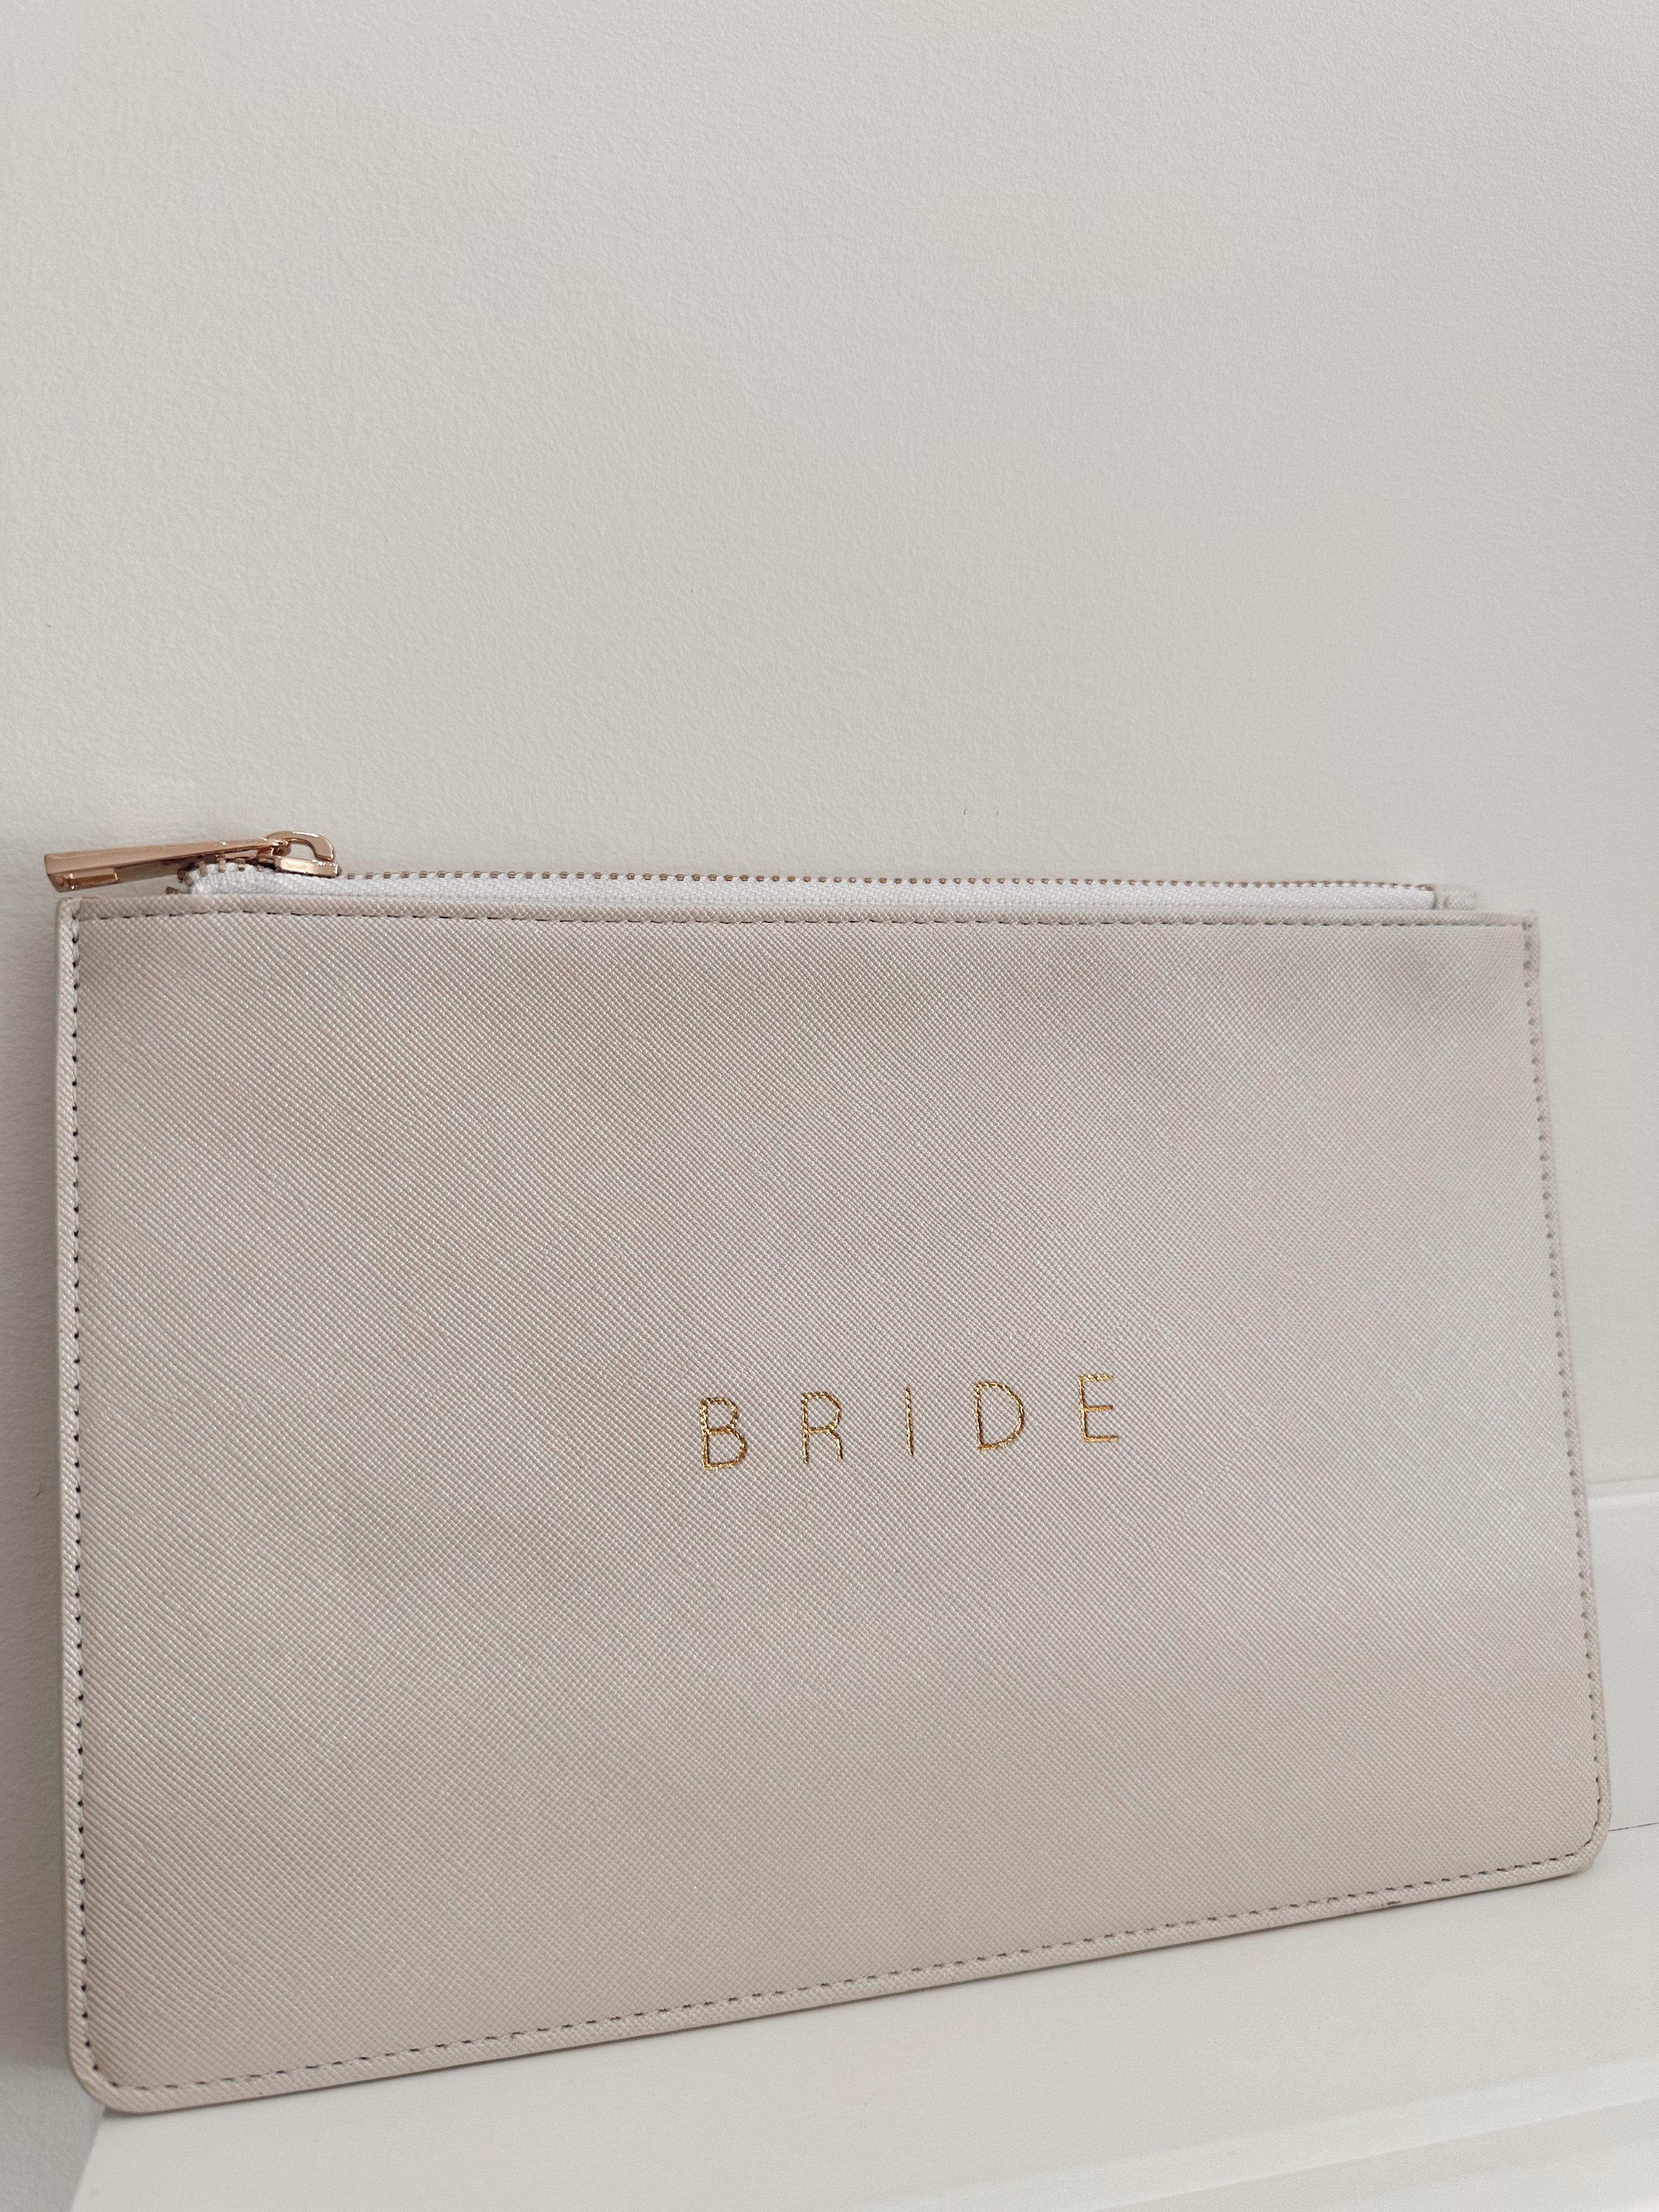 Bride Zippered Clutch Bag